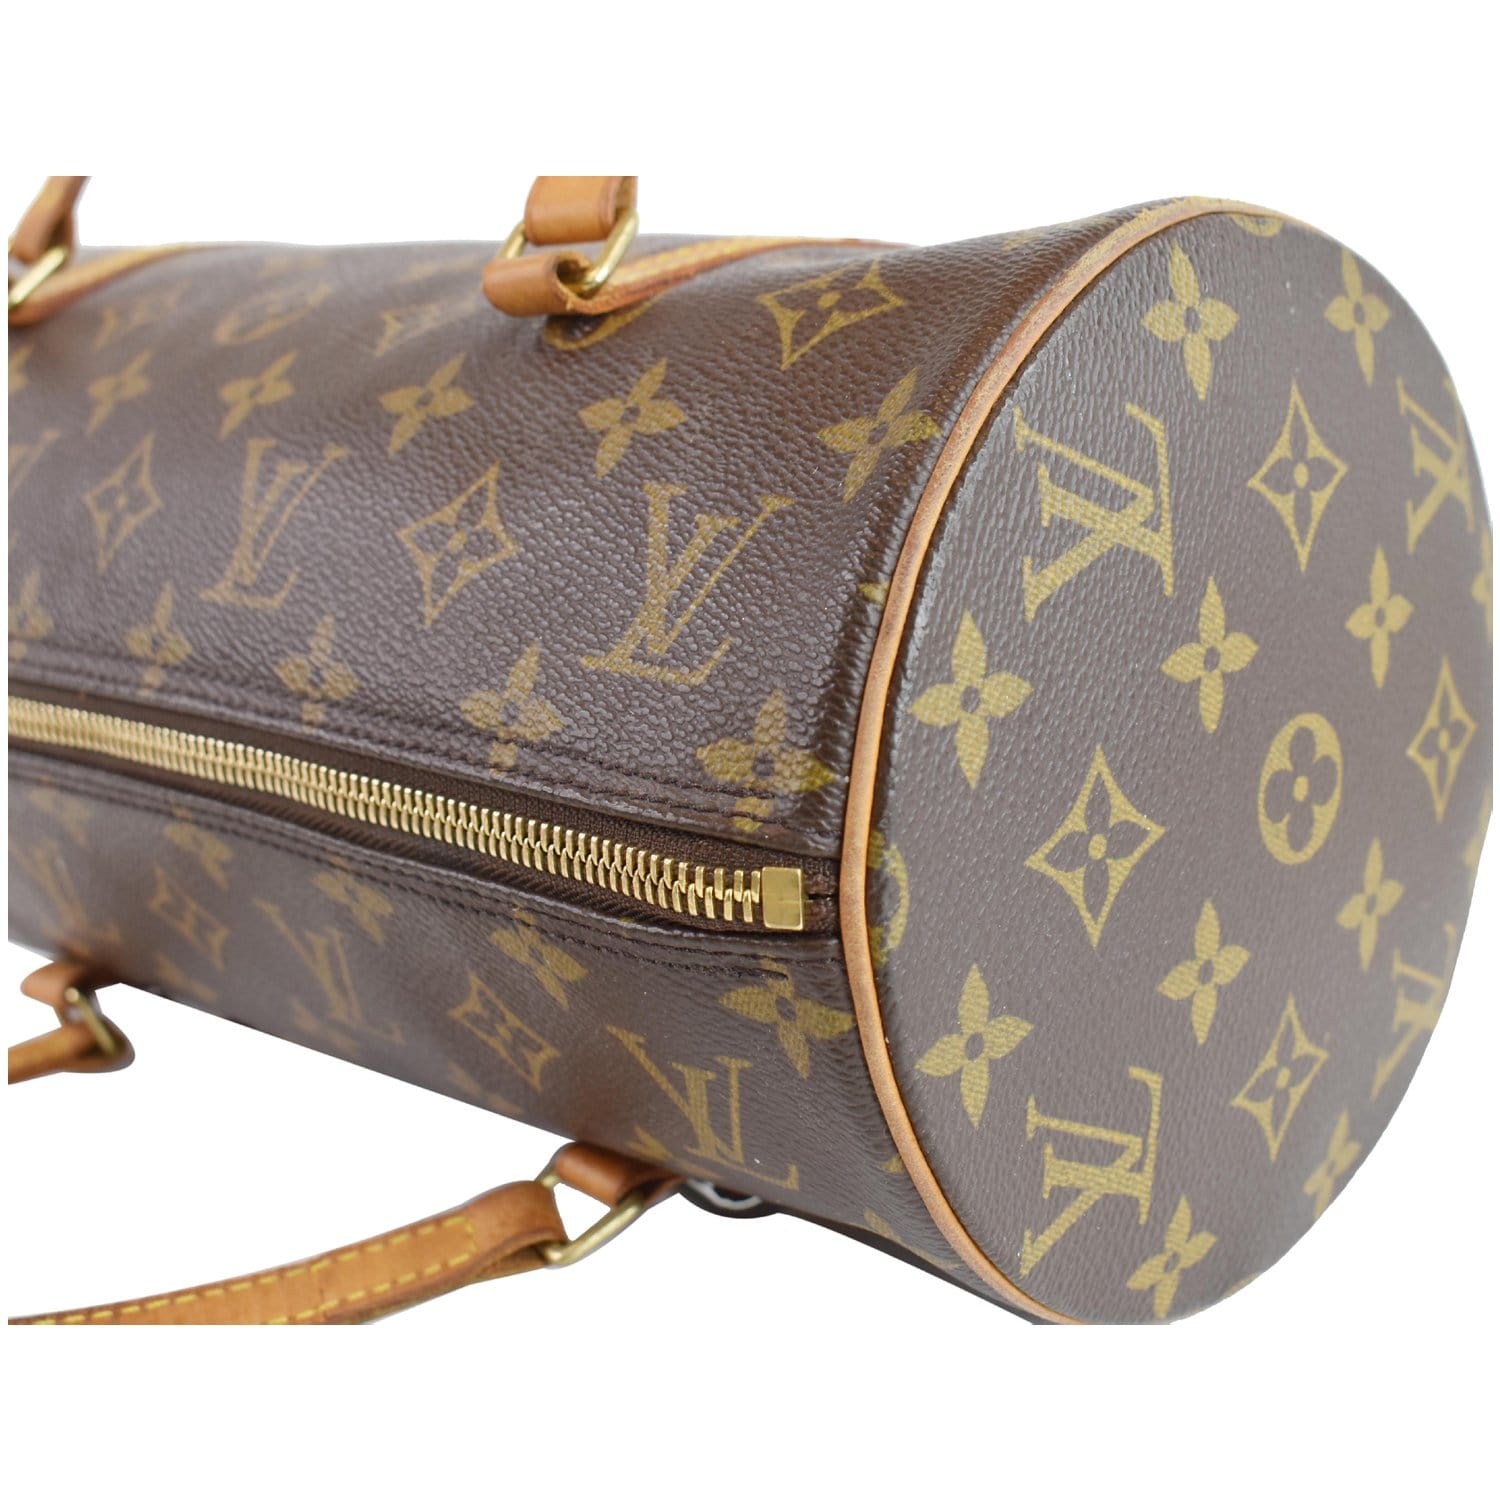 Louis Vuitton cylinder shaped monogrammed bag